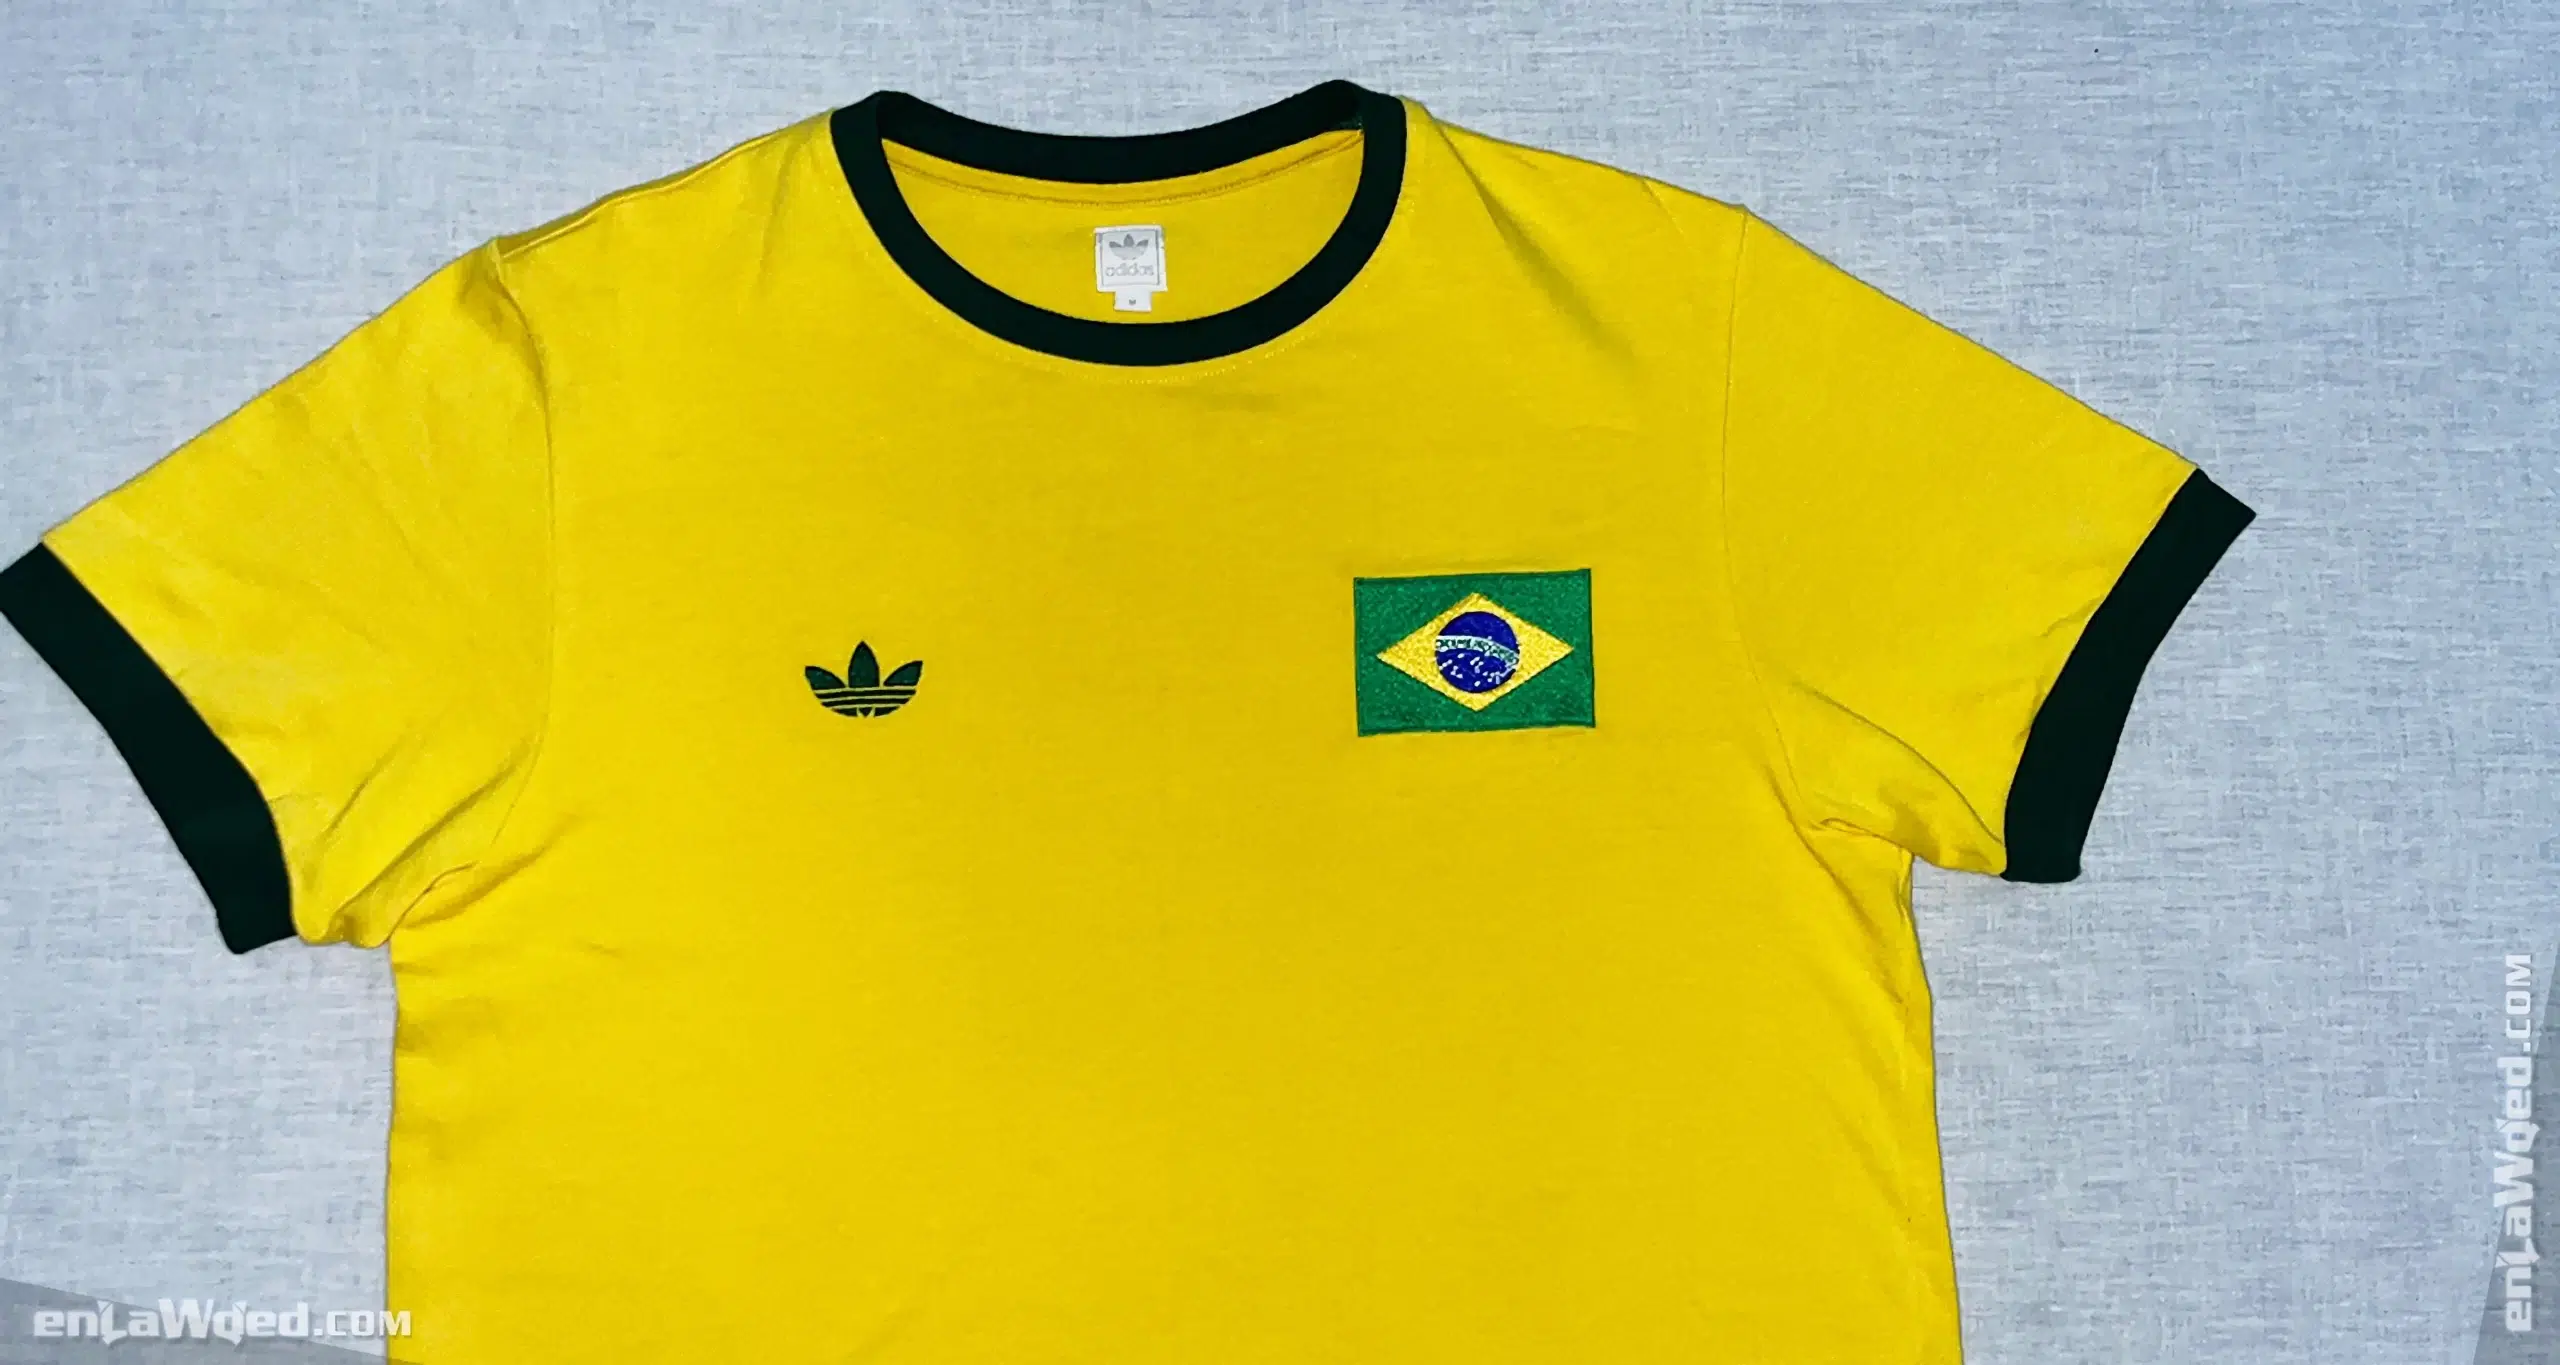 Men’s 2006 Brasil ’70 T-Shirt by Adidas Originals: Memorable (EnLawded.com file #lmchk90217ip2y123508kg9st)